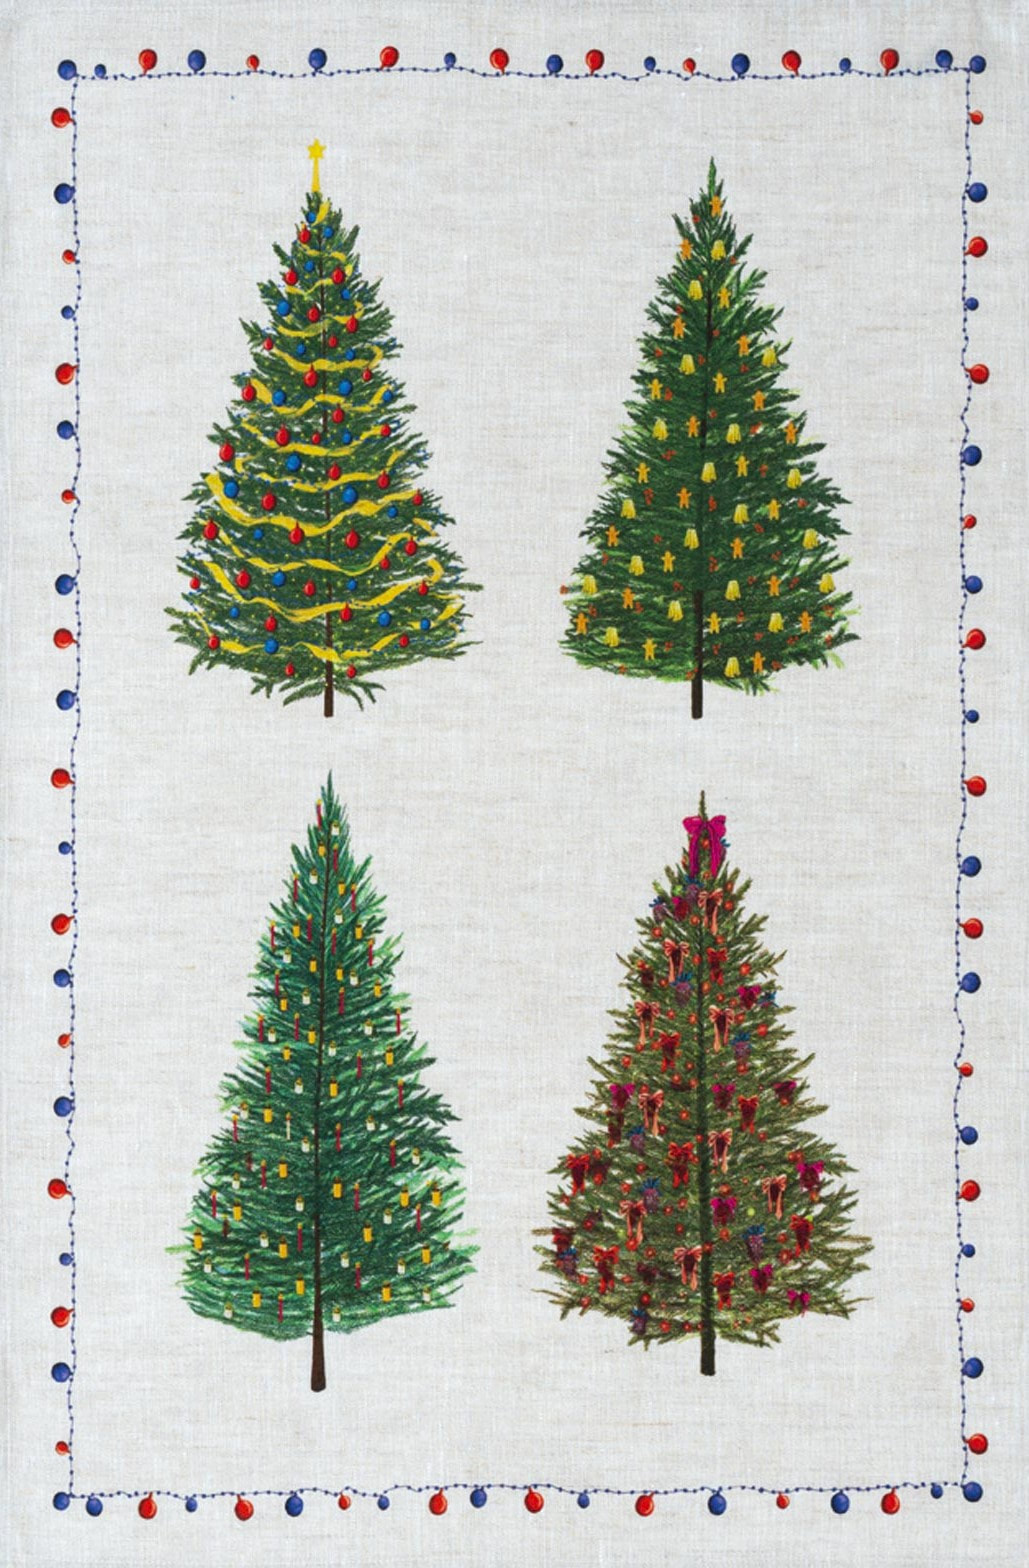 Embroidered Tea Towels, Christmas Kitchen Towel, Kitchen Decor